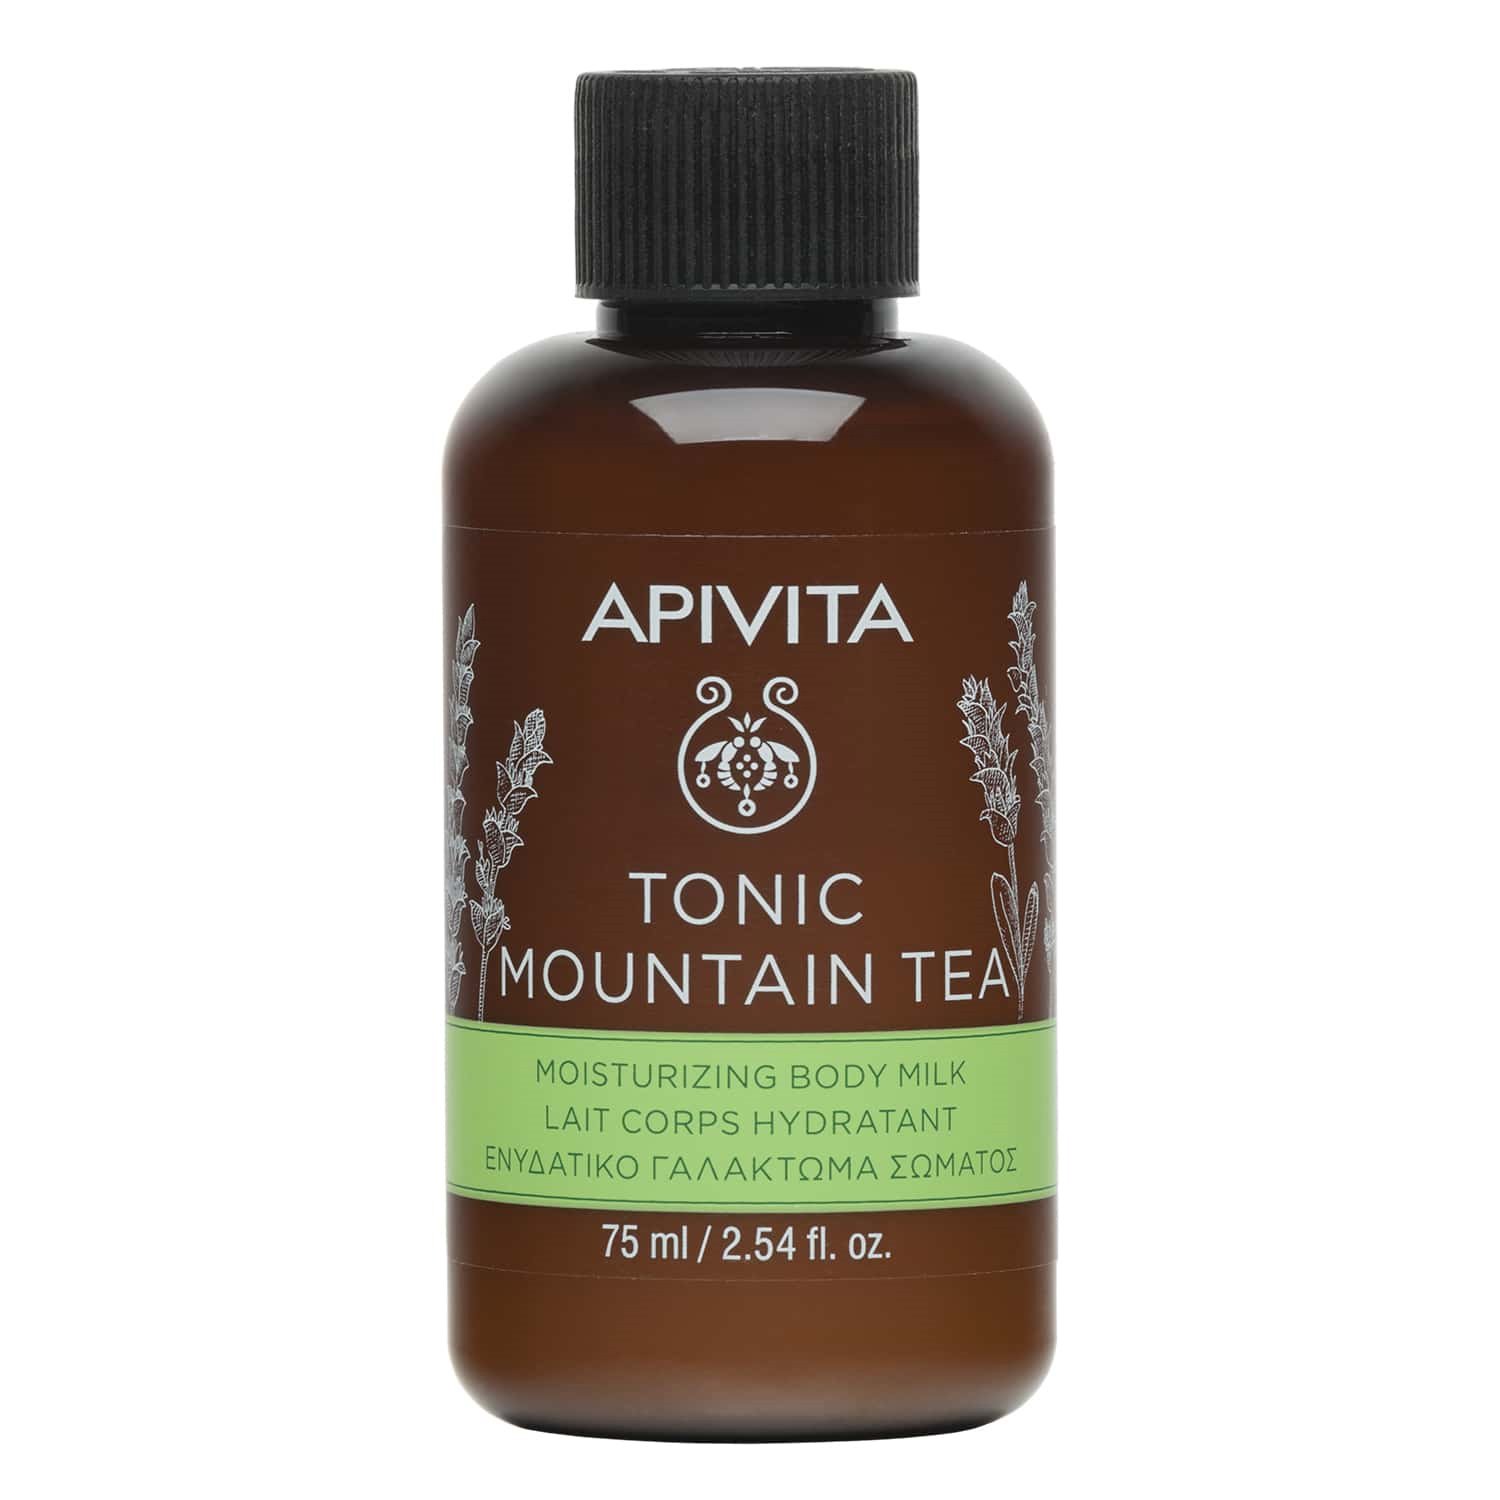 Apivita Tonic Mountain Tea Moisturizing Body Milk Ενυδατικό Γαλάκτωμα Σώματος με Τσάι του Βουνού 75ml